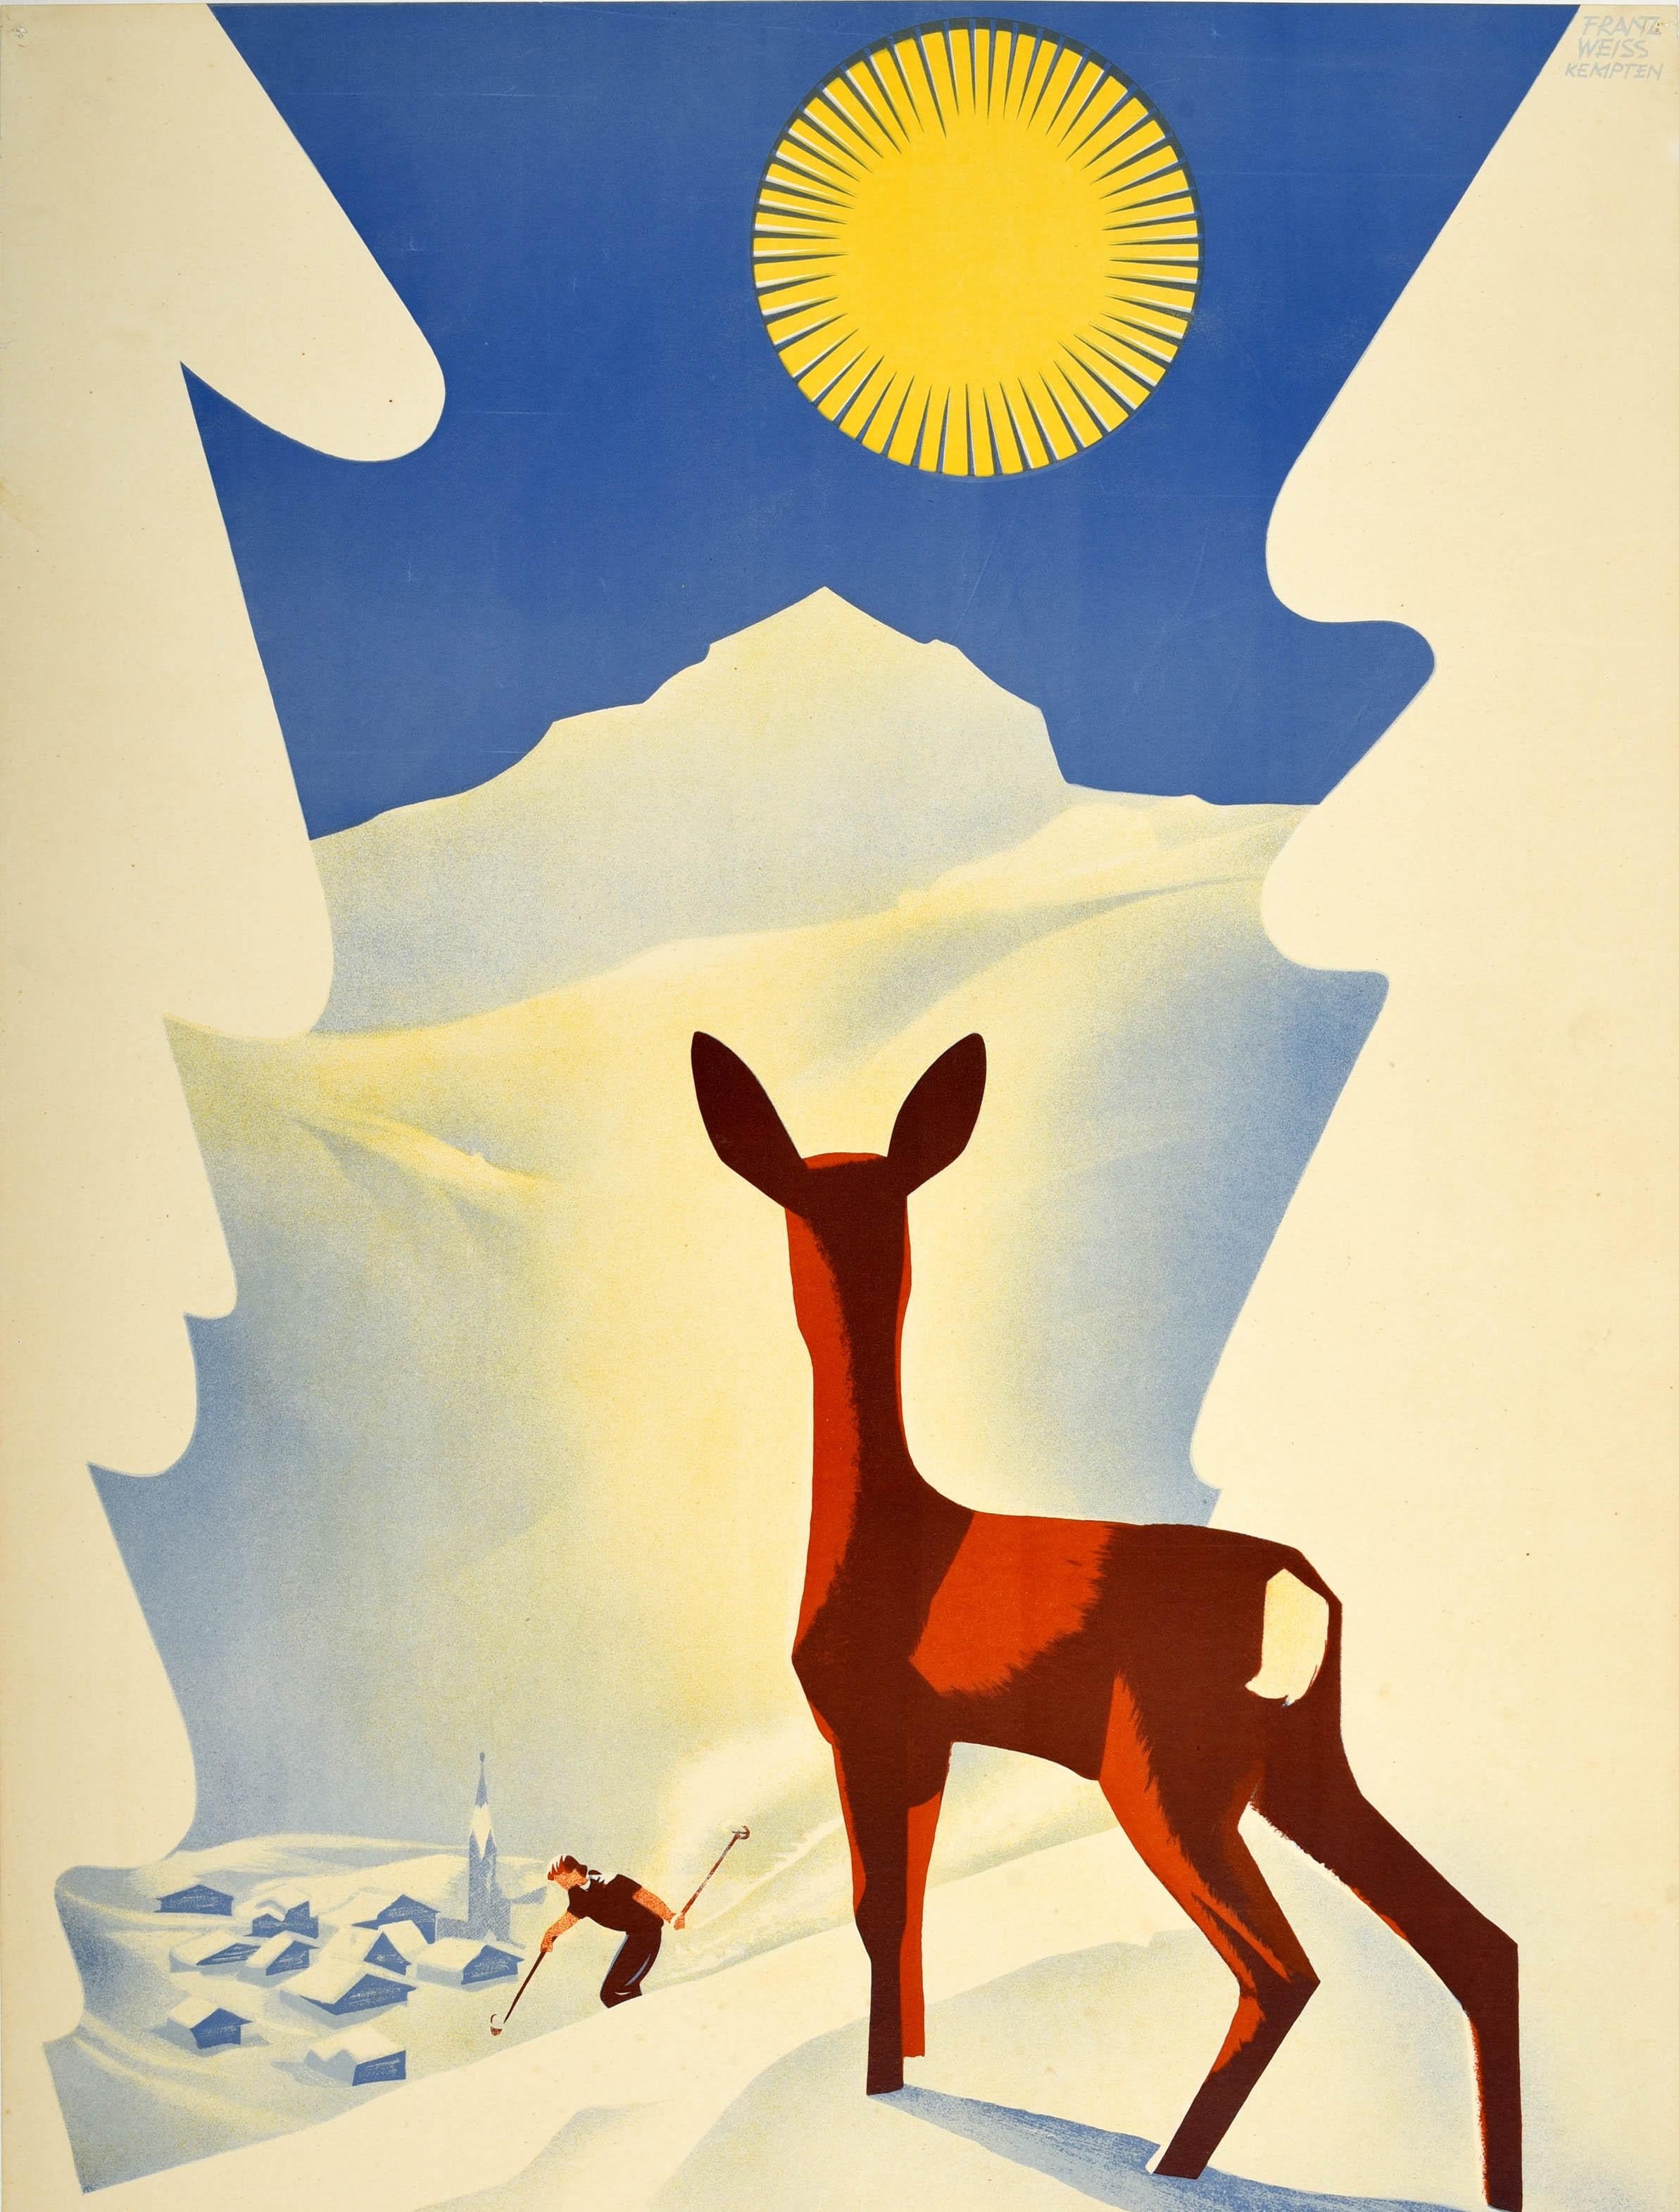 Mid-20th Century Original Vintage Poster Allgau Germany Alps Skiing Winter Sun Snow Mountain Deer